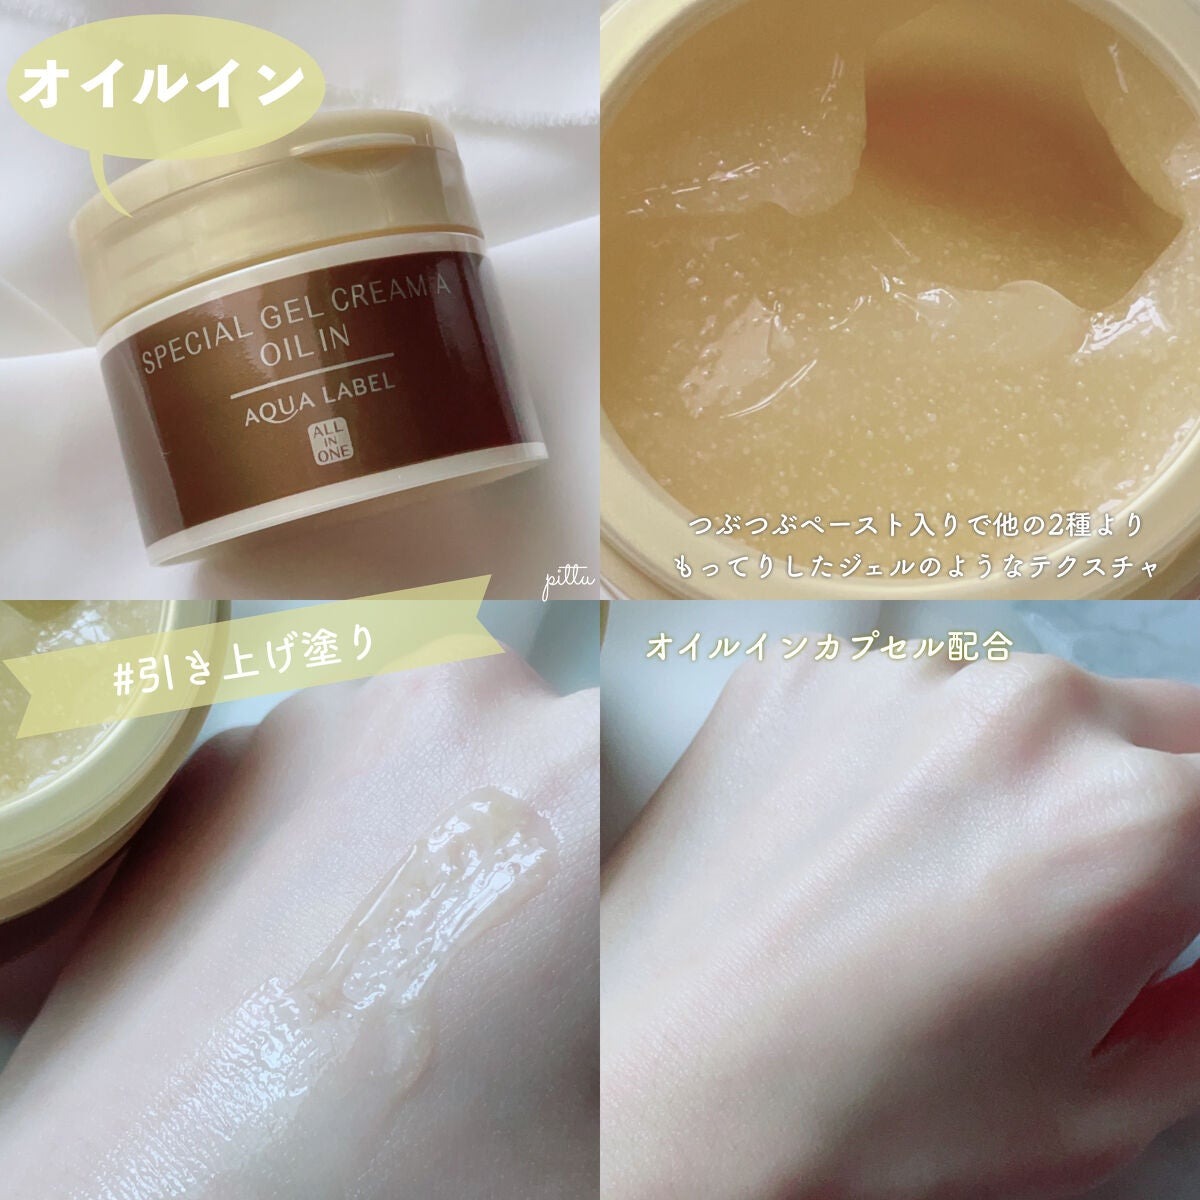 kem duong aqualabel shiseido japan all in one vang review